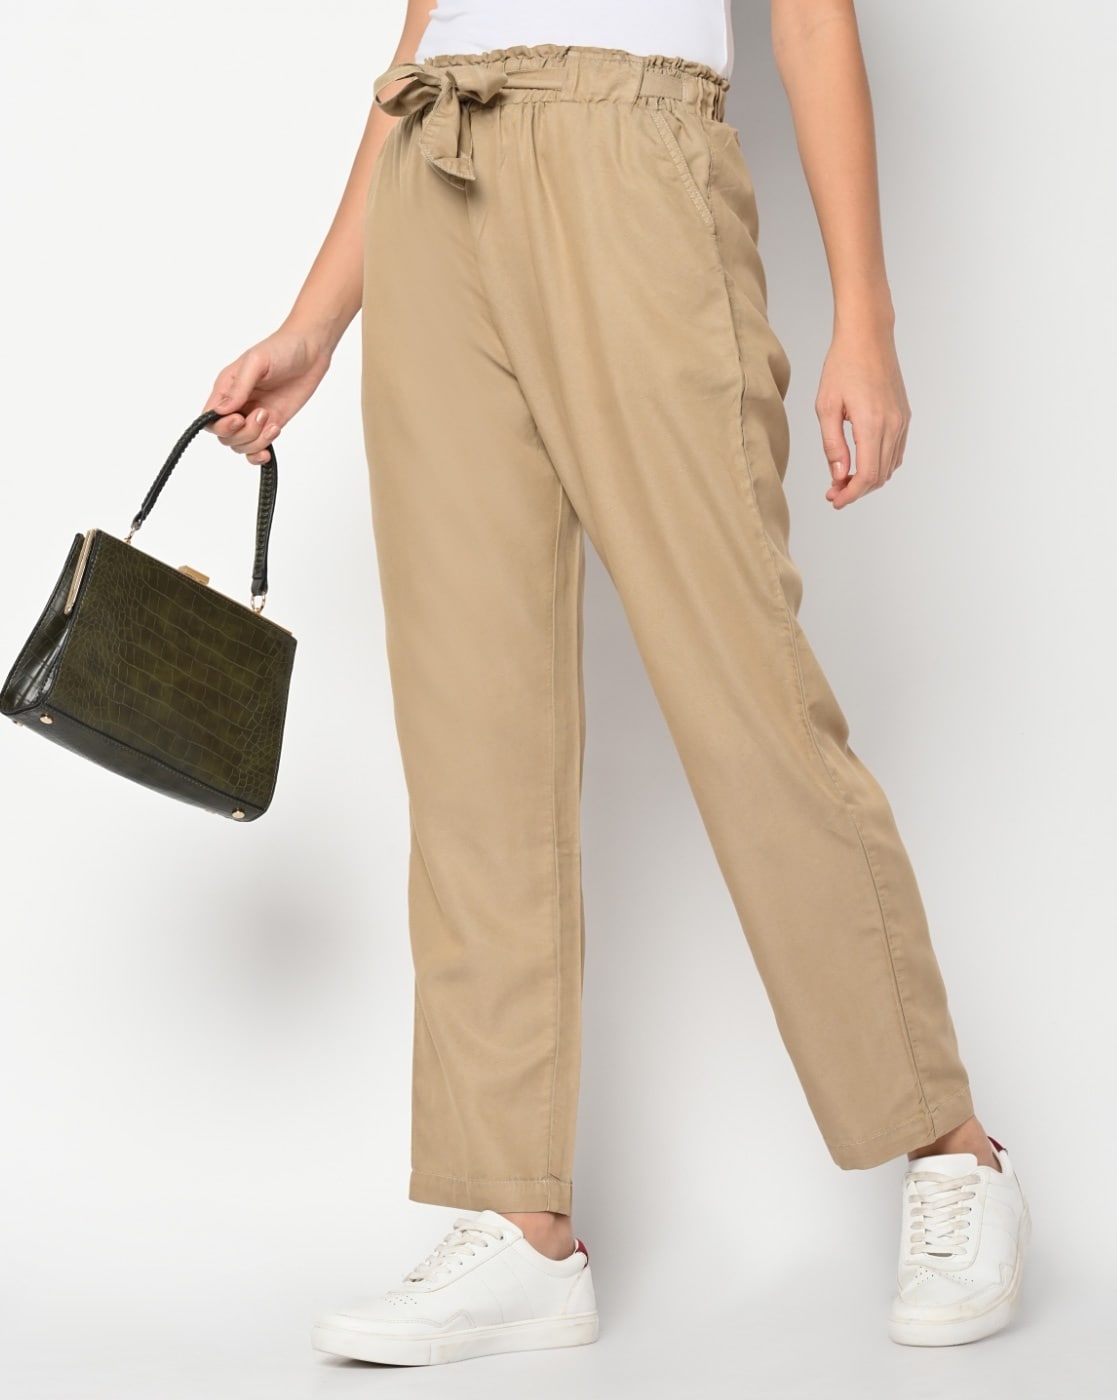 Buy Women Yellow Stripe Formal Regular Fit Trousers Online  676768  Van  Heusen